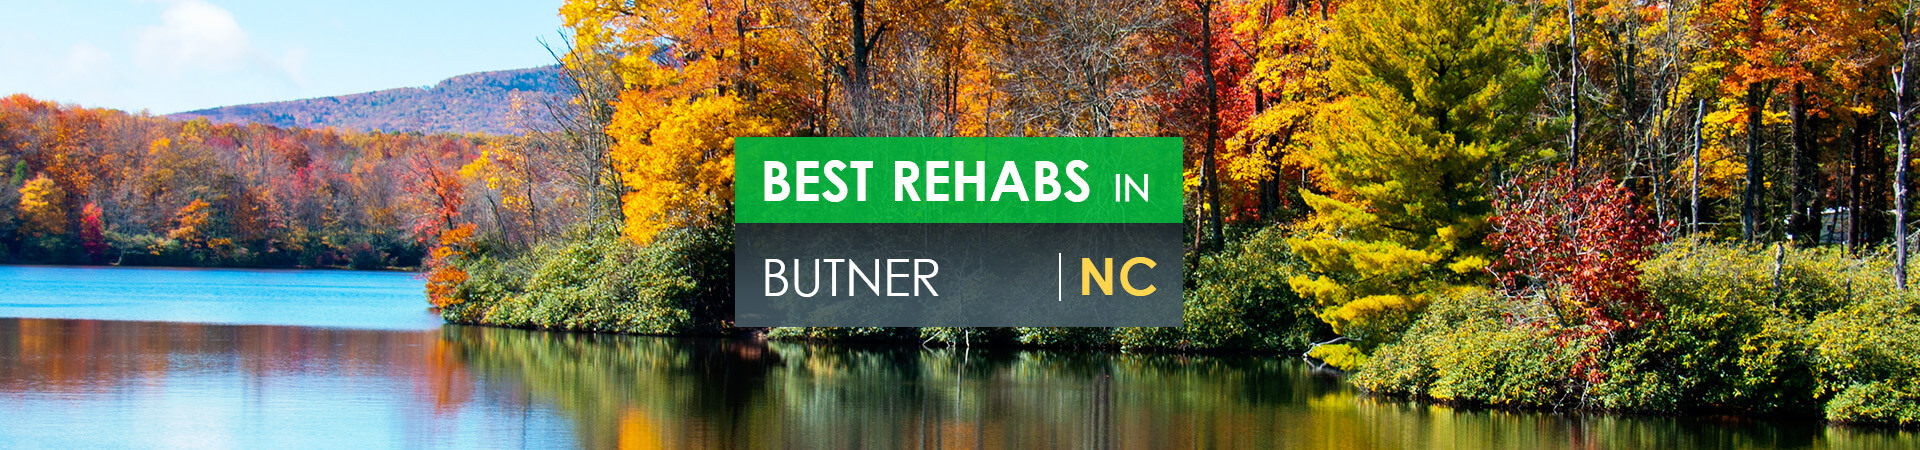 Best rehabs in Butner, NC